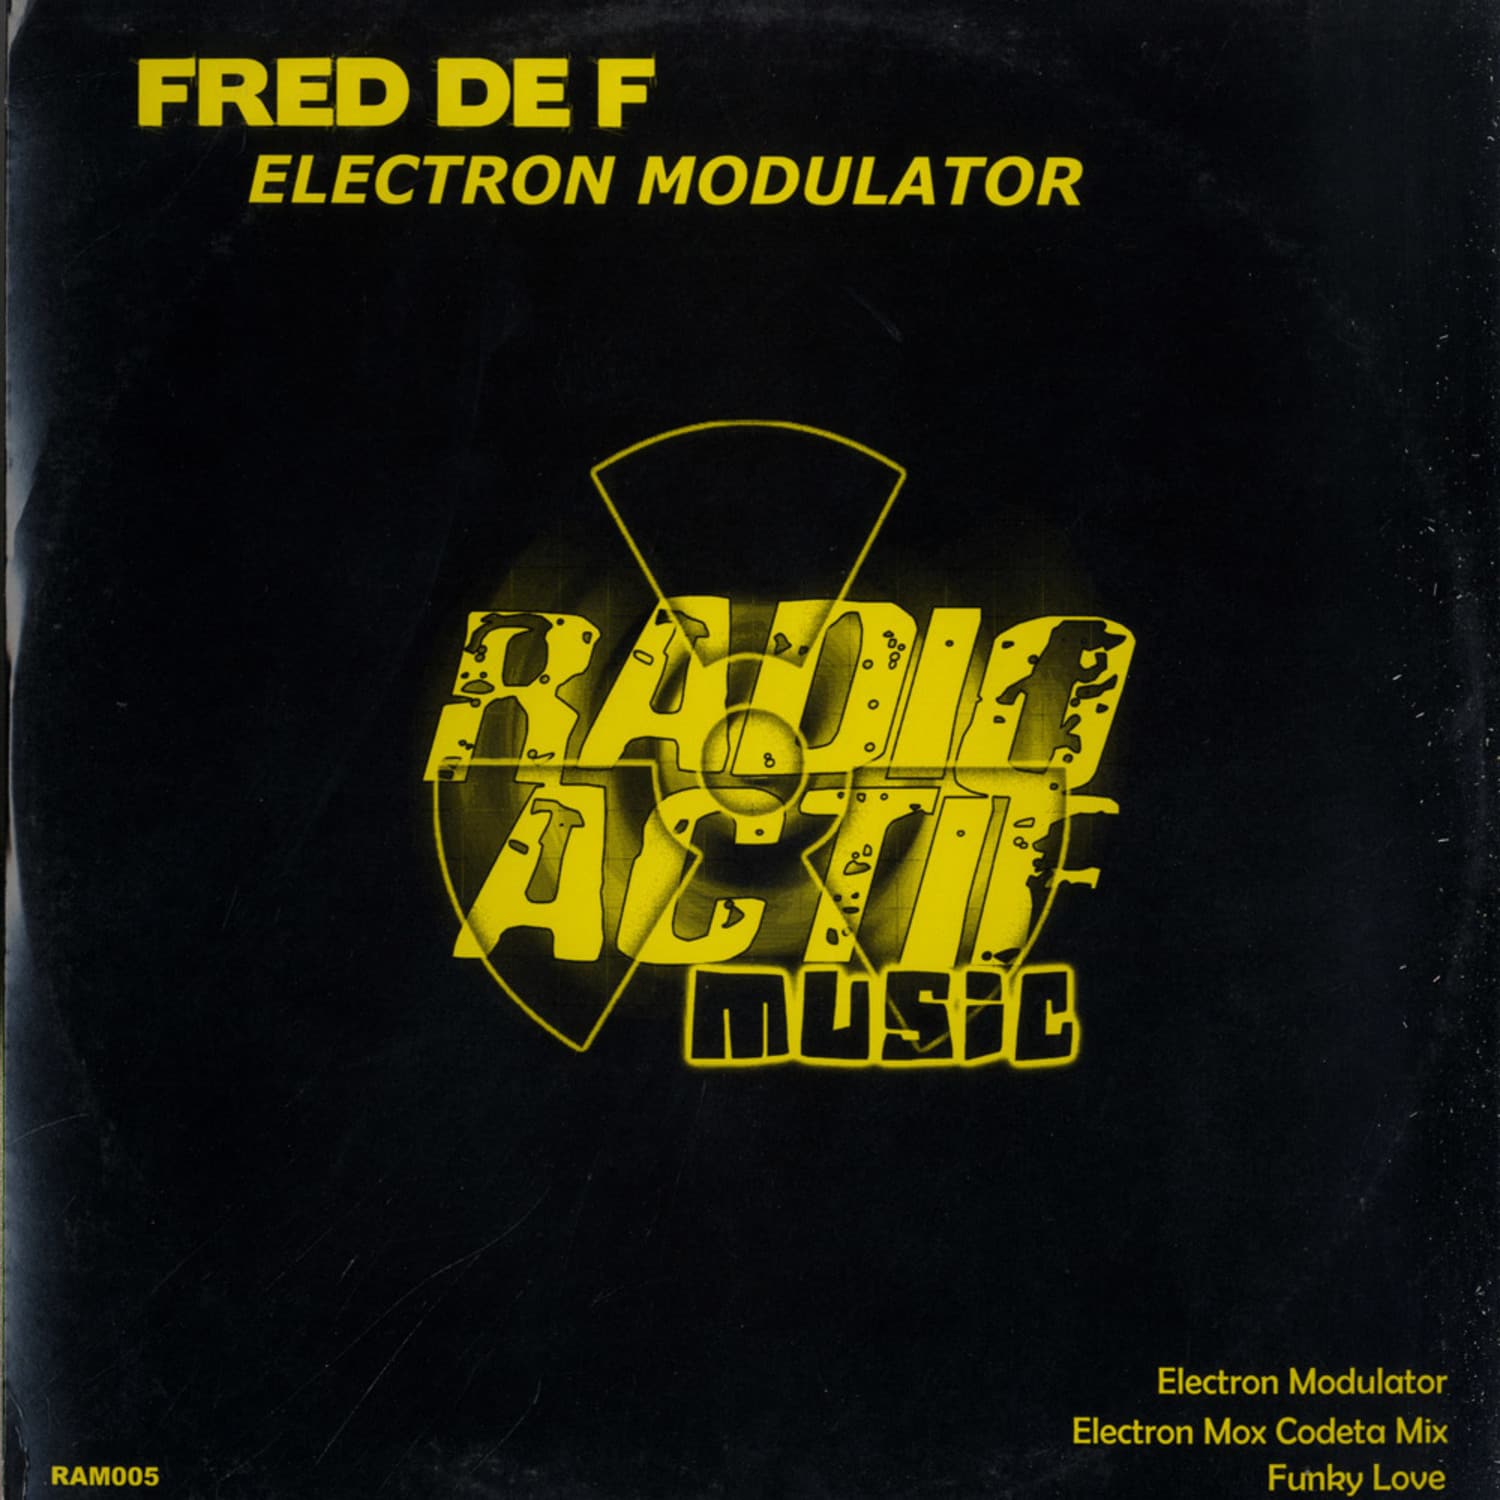 Fred De F - ELECTRON MODULATOR